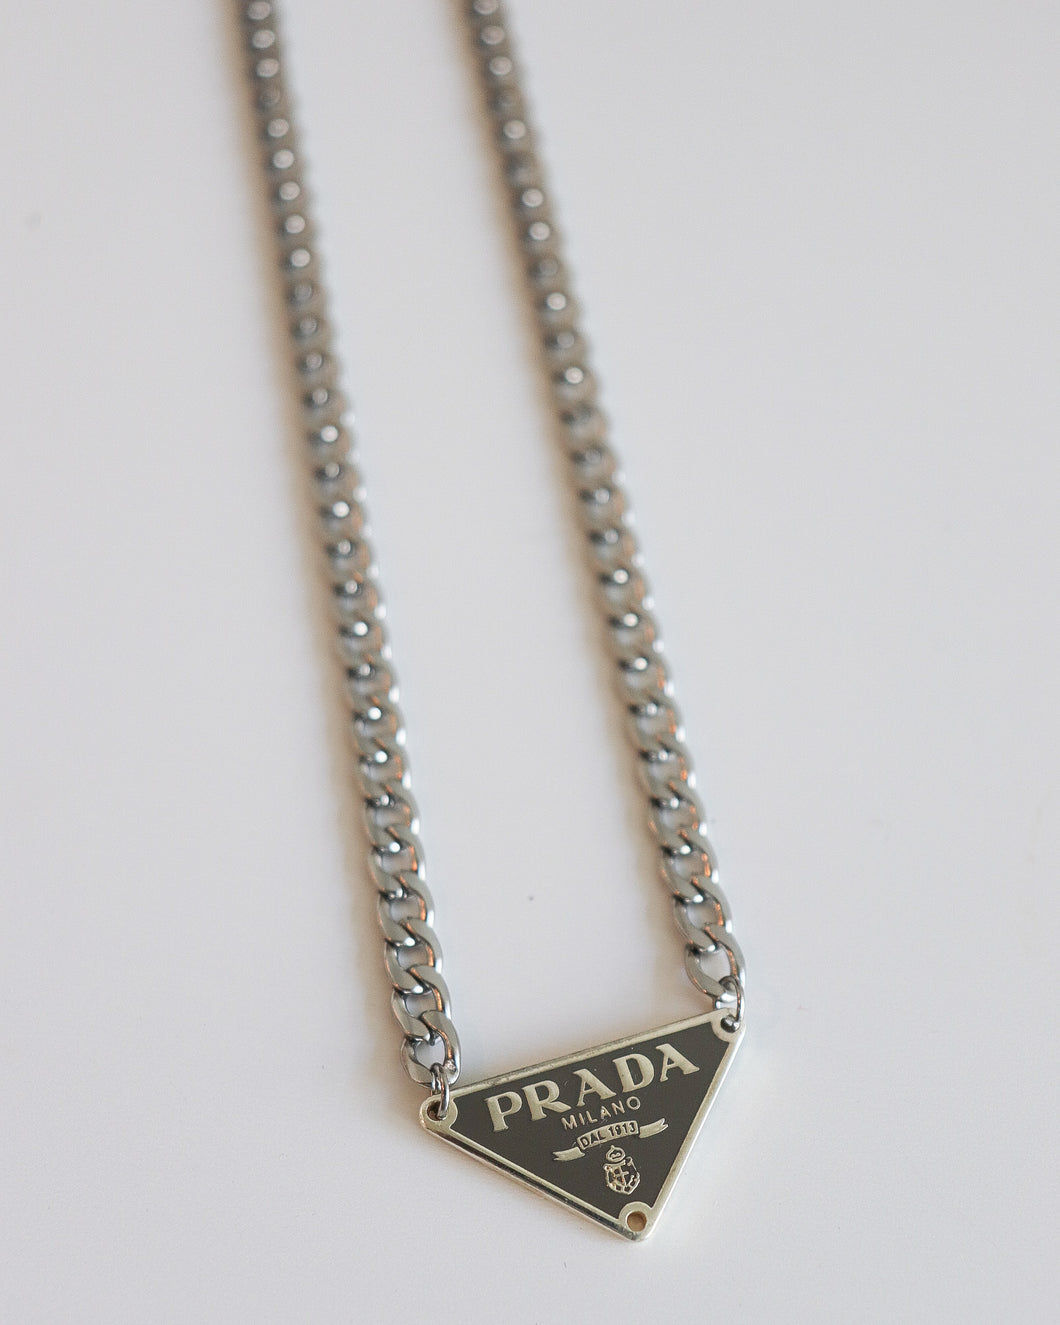 Prada necklace in silver